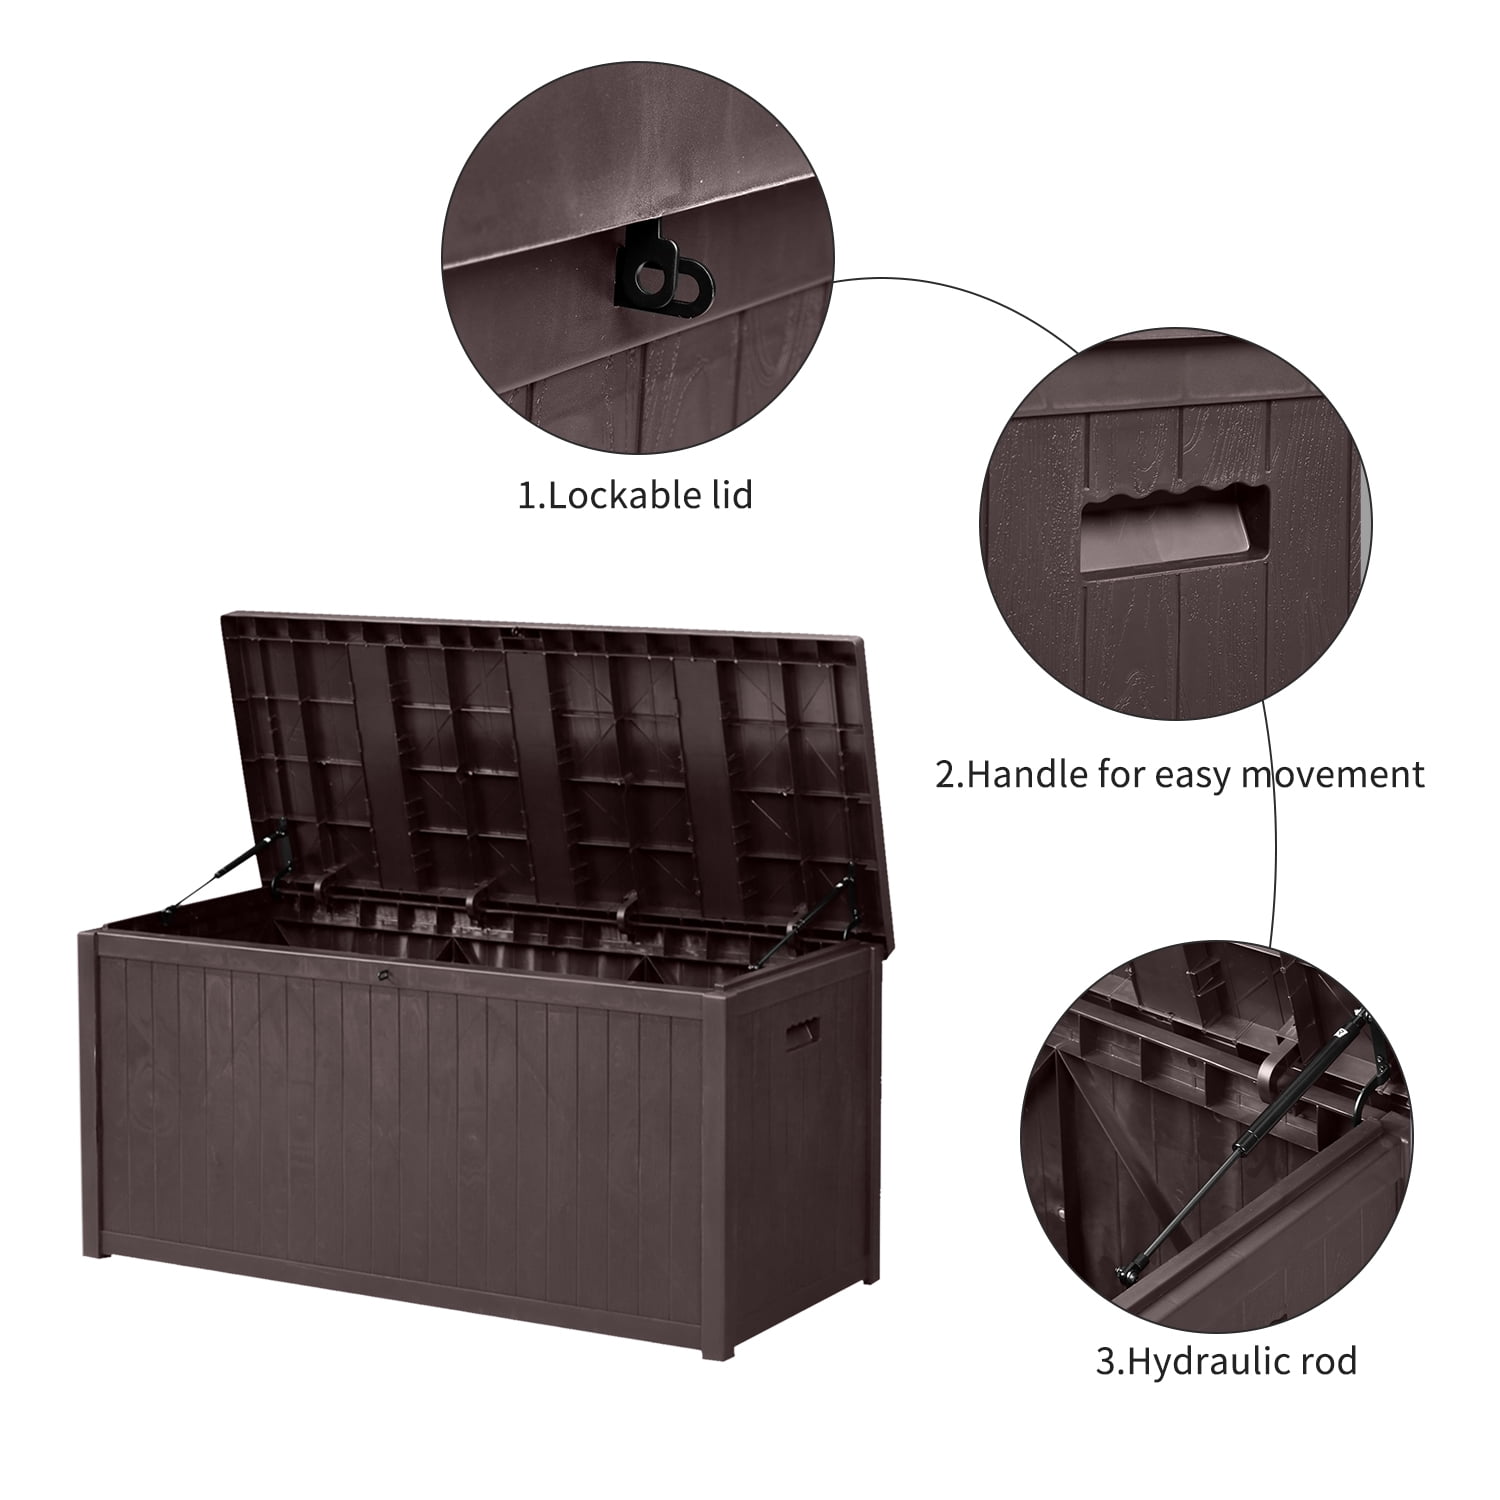 Ainfox OB-DB016 52-Gallon Small Deck Box - Outdoor Storage